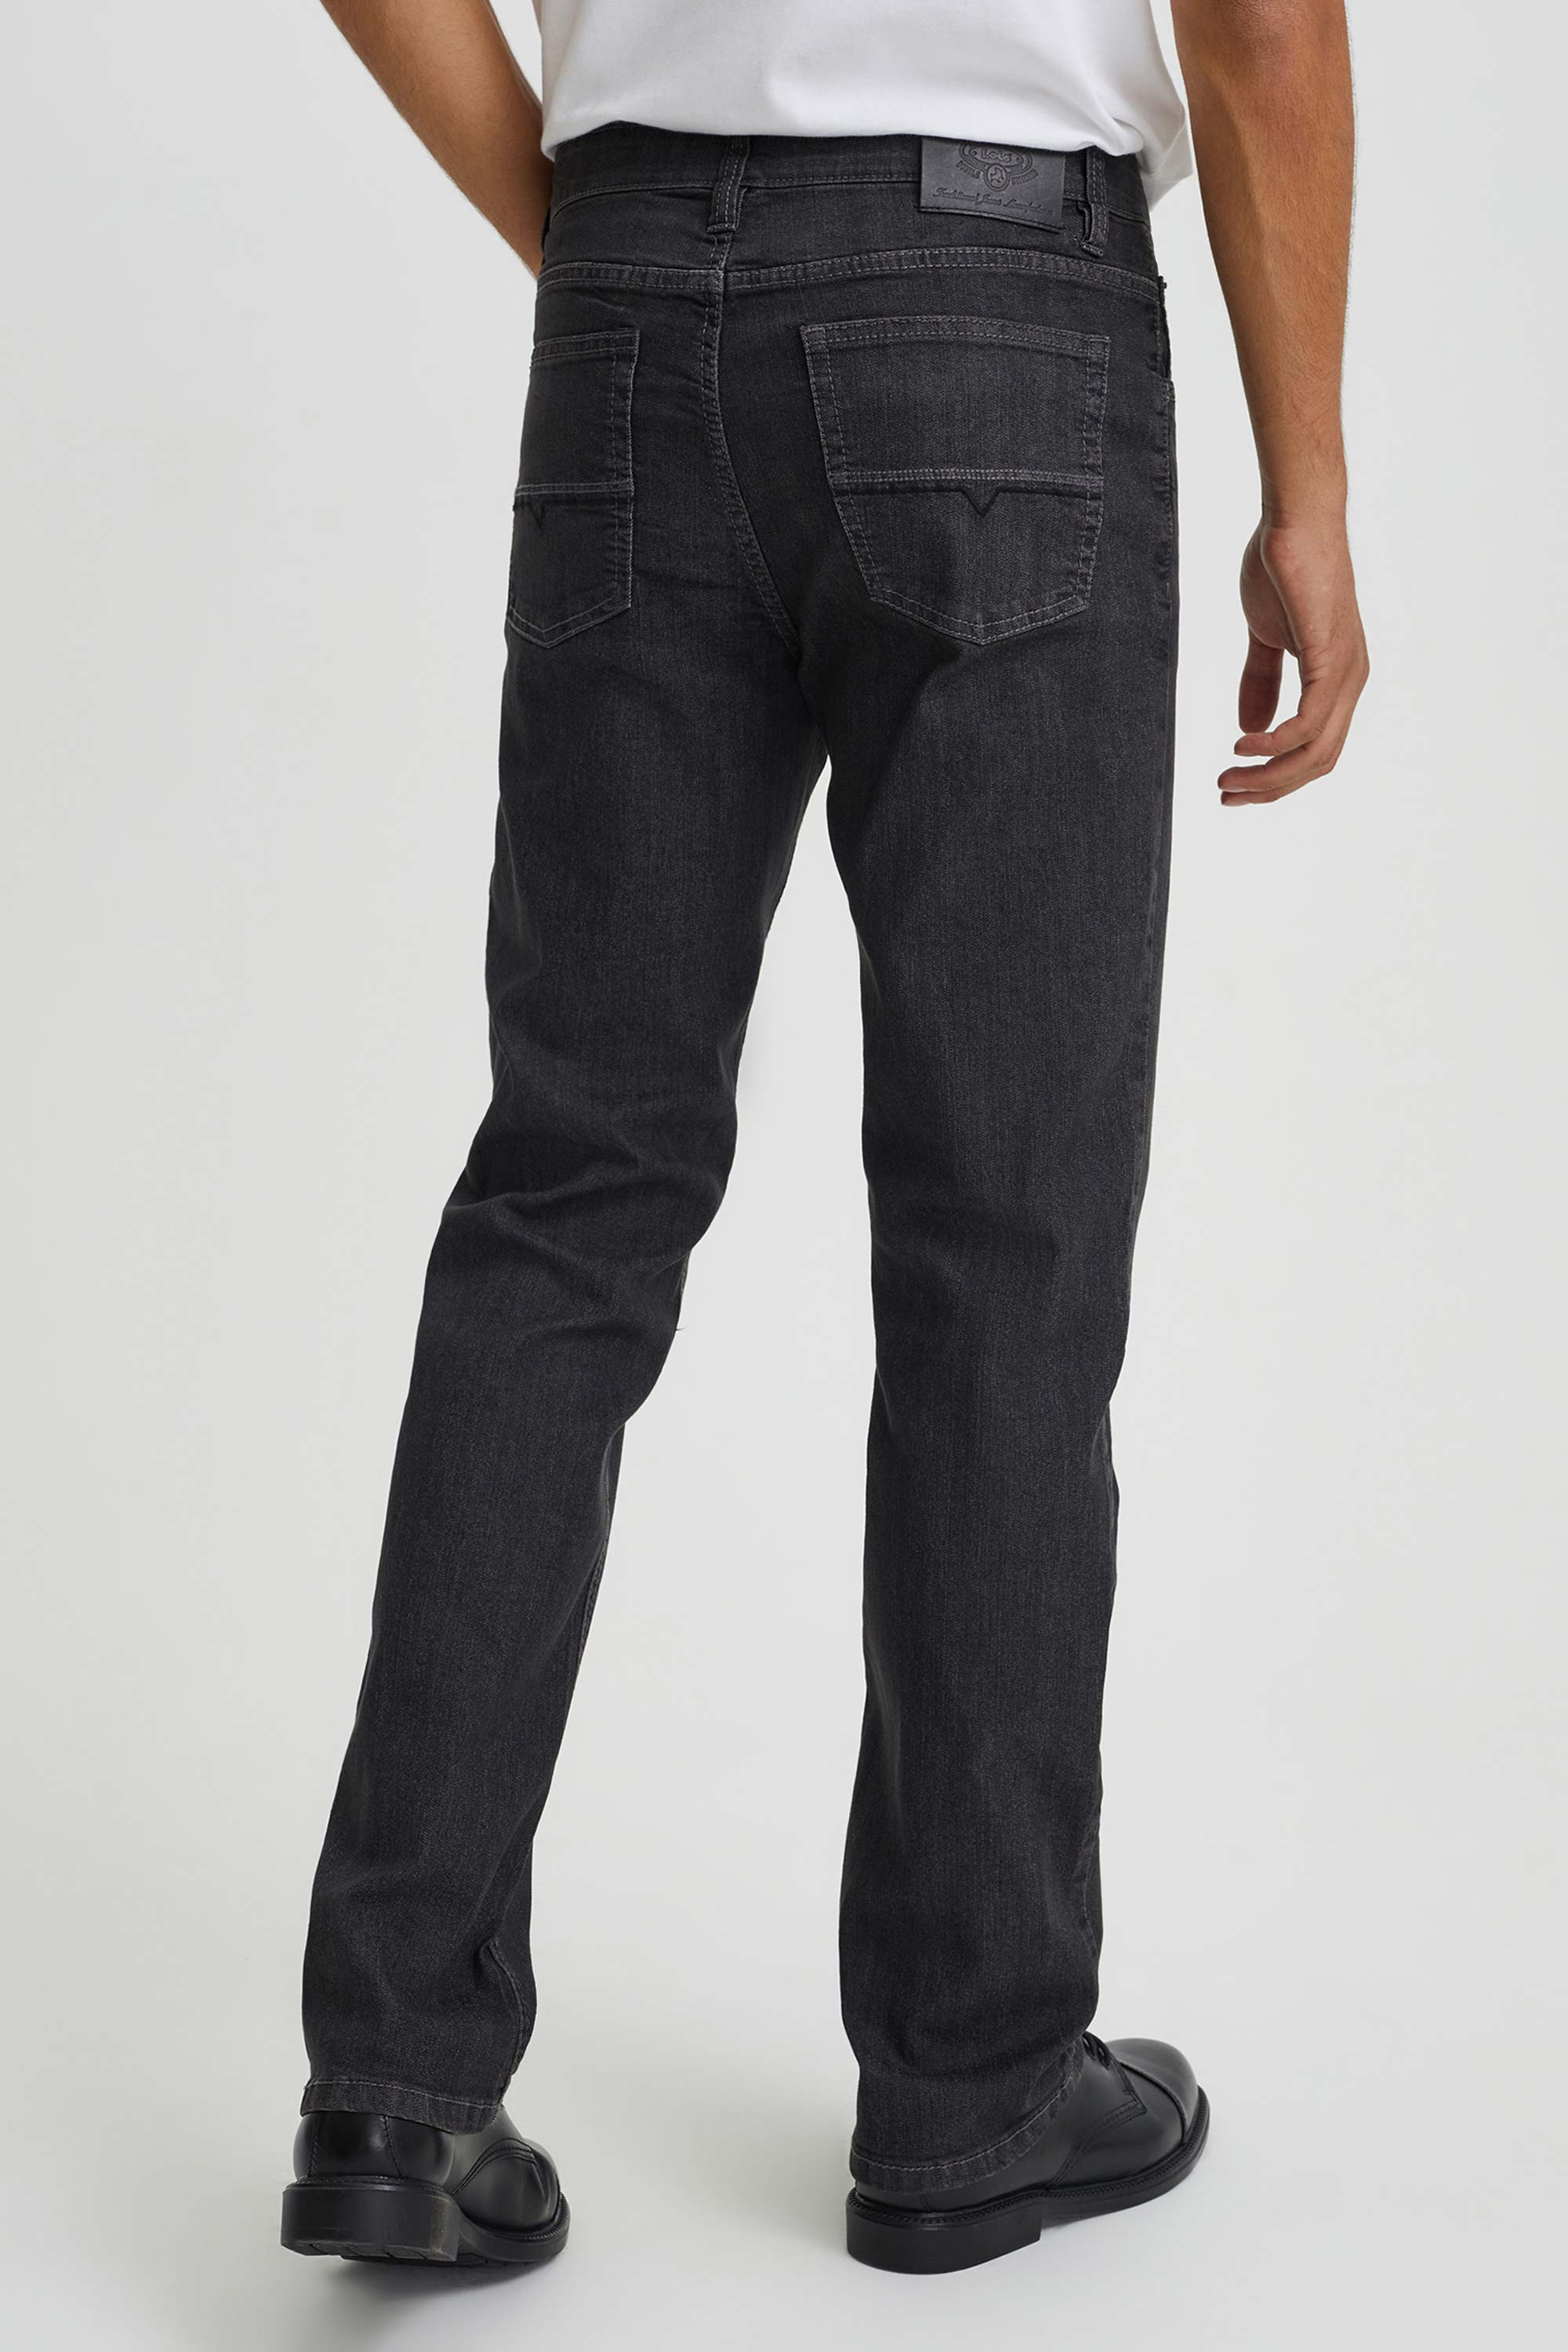 Brad-L straight-legged jeans